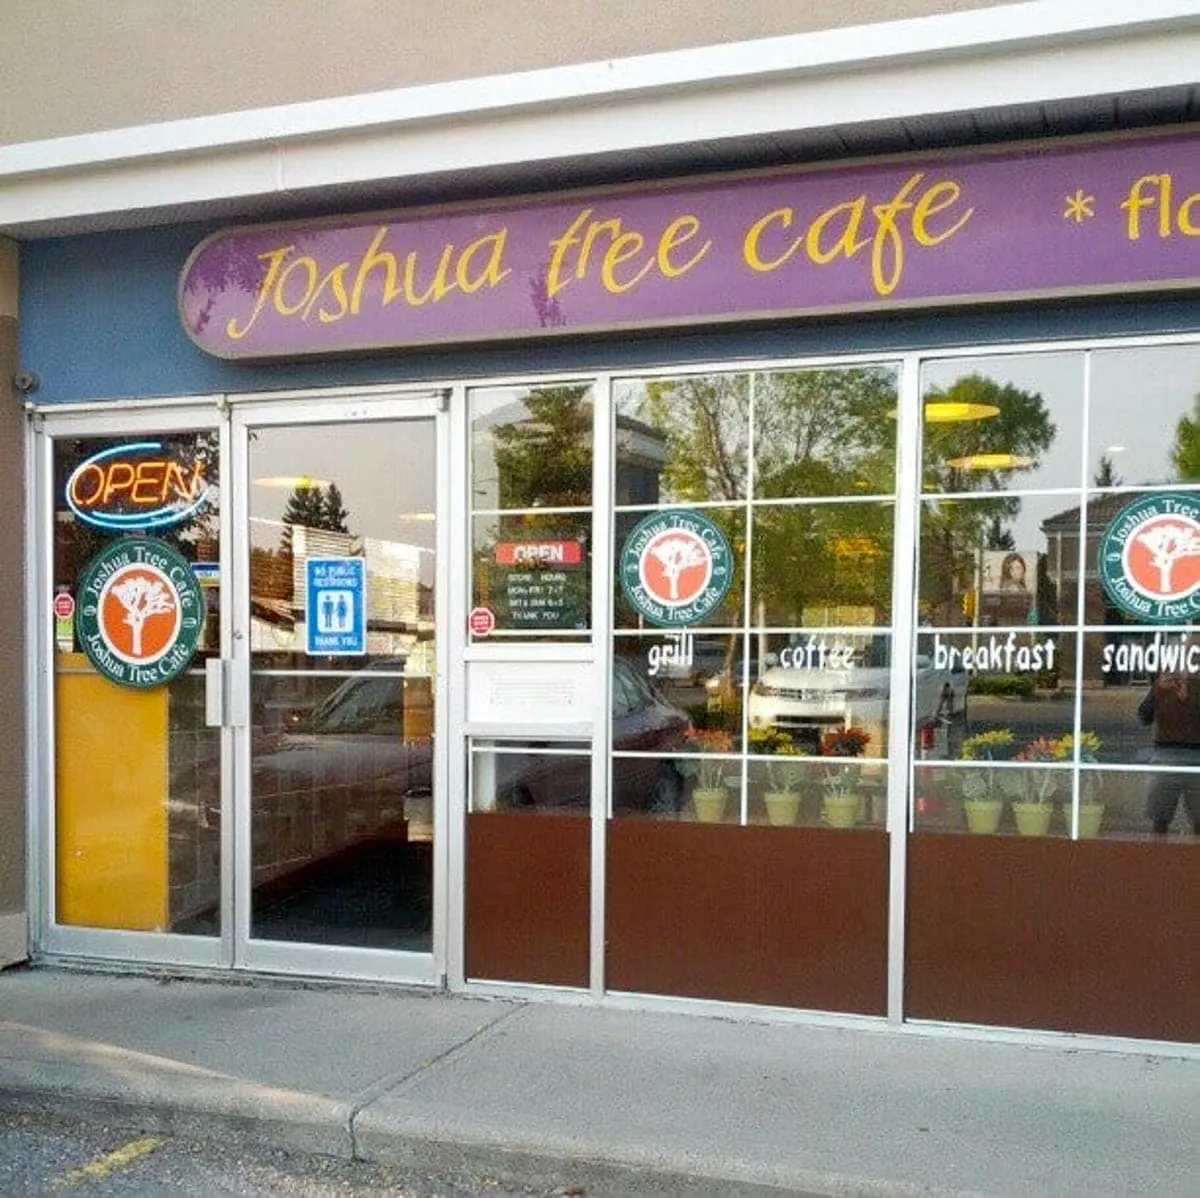 storefront of Joshua tree cafe Calgary